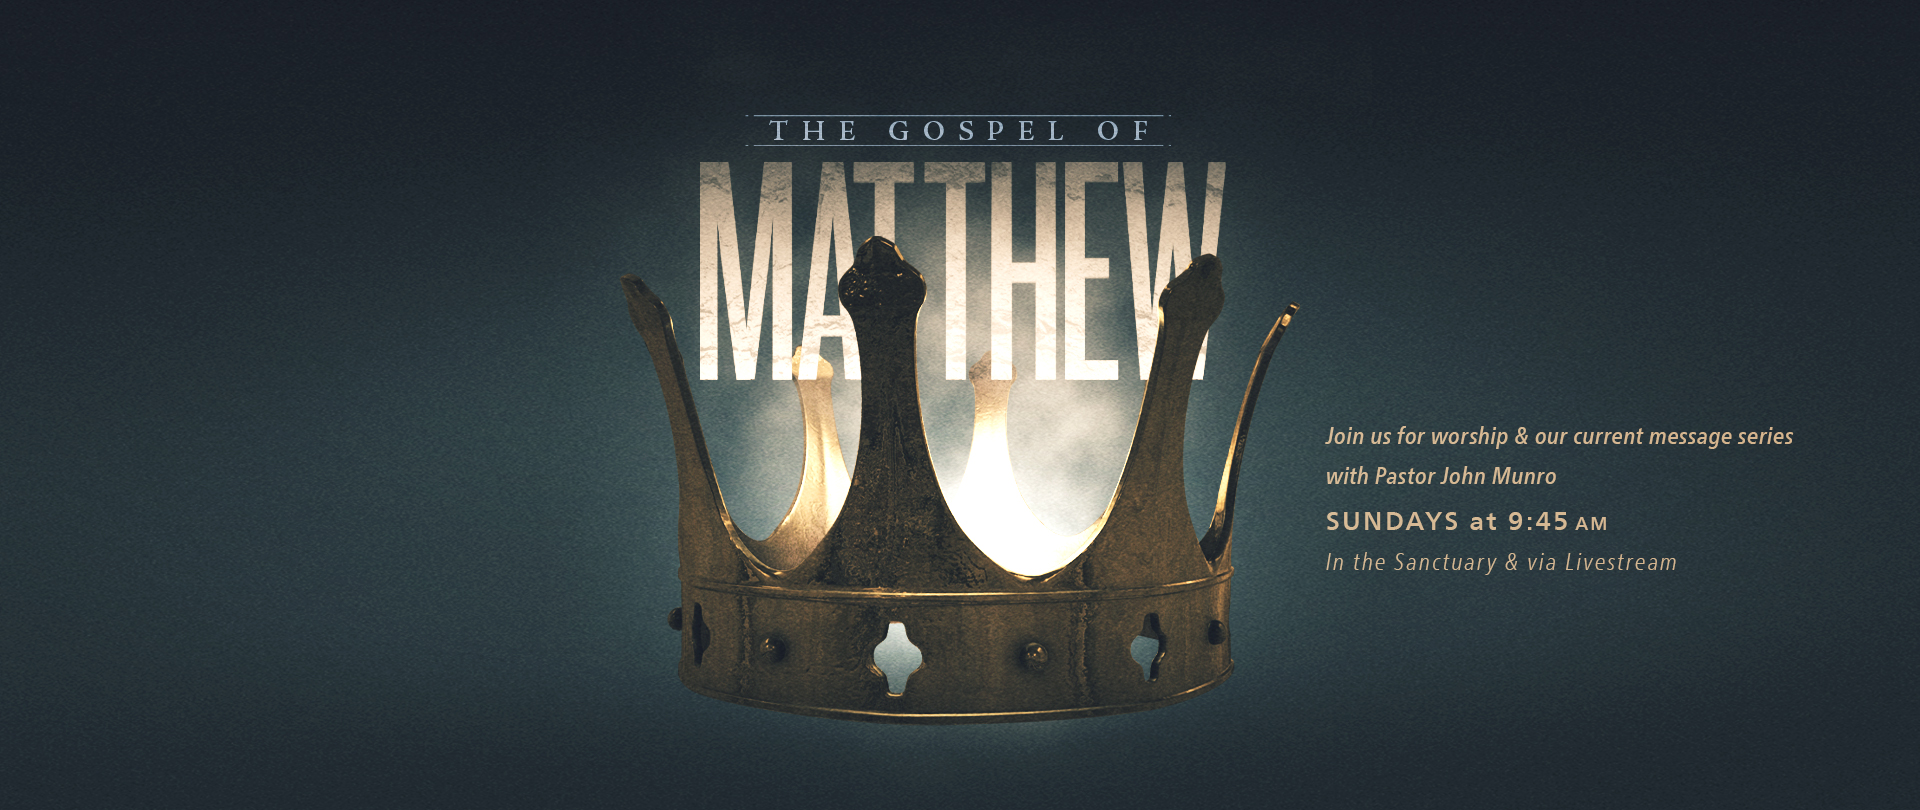 The Gospel of Matthew
Listen again!
